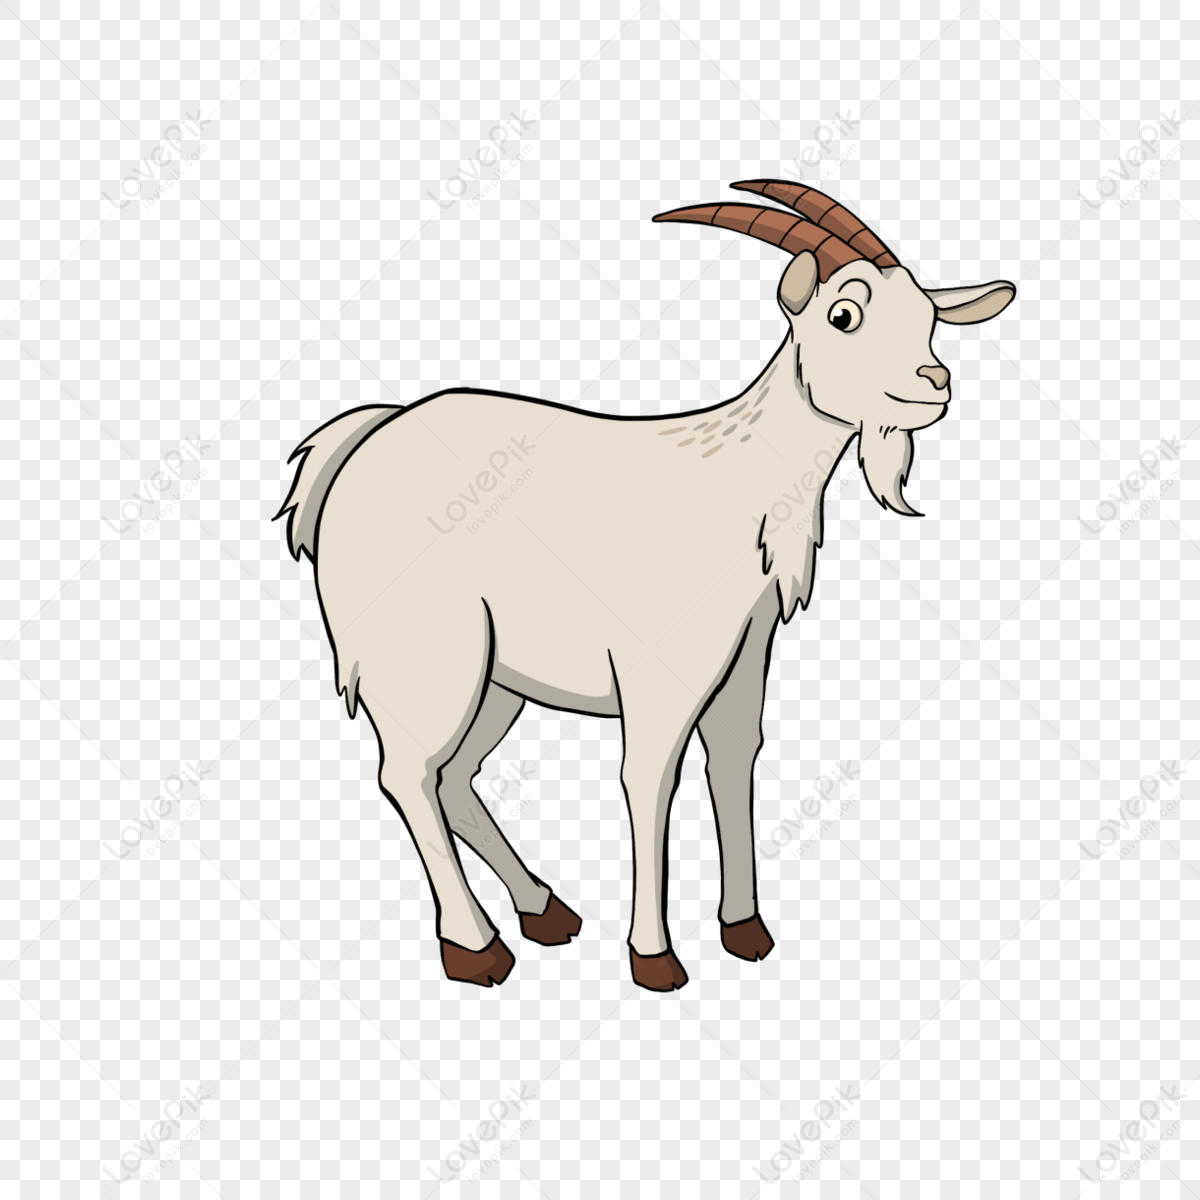 Hand drawn animal illustration cartoon goat clipart,hand in hand illustration,lamb png hd transparent image